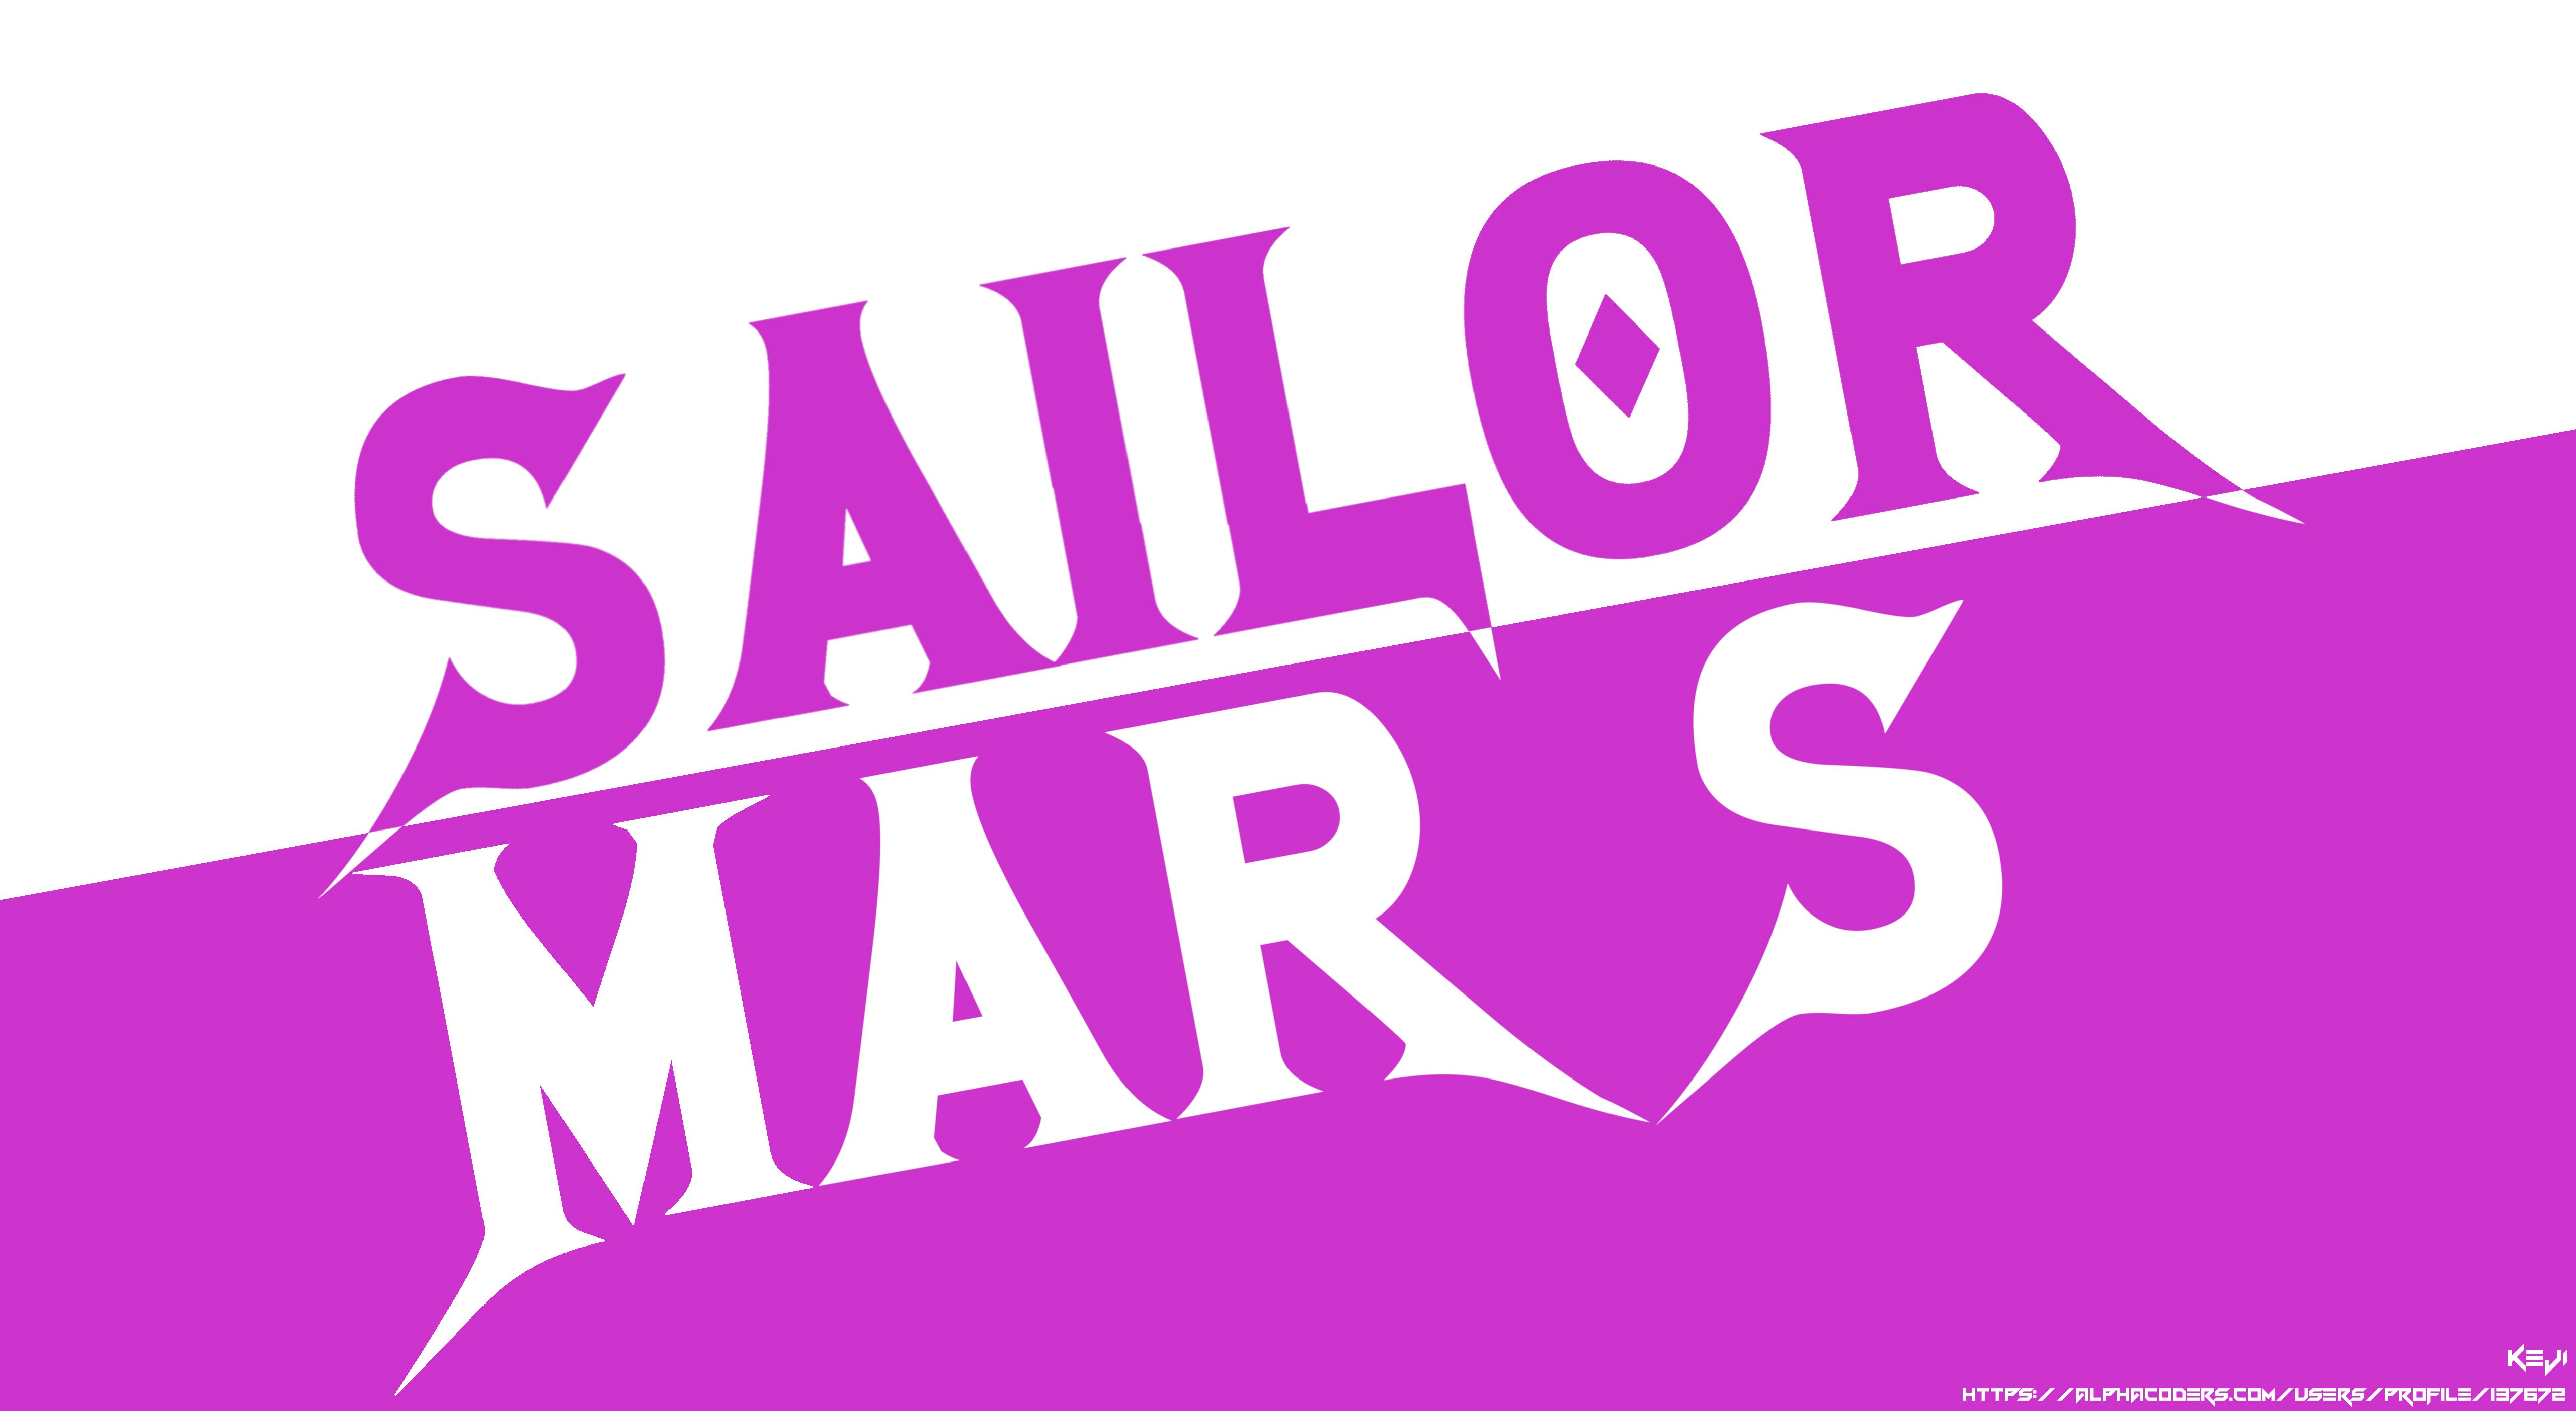 440531 baixar imagens anime, sailor moon, sailor mars - papéis de parede e protetores de tela gratuitamente